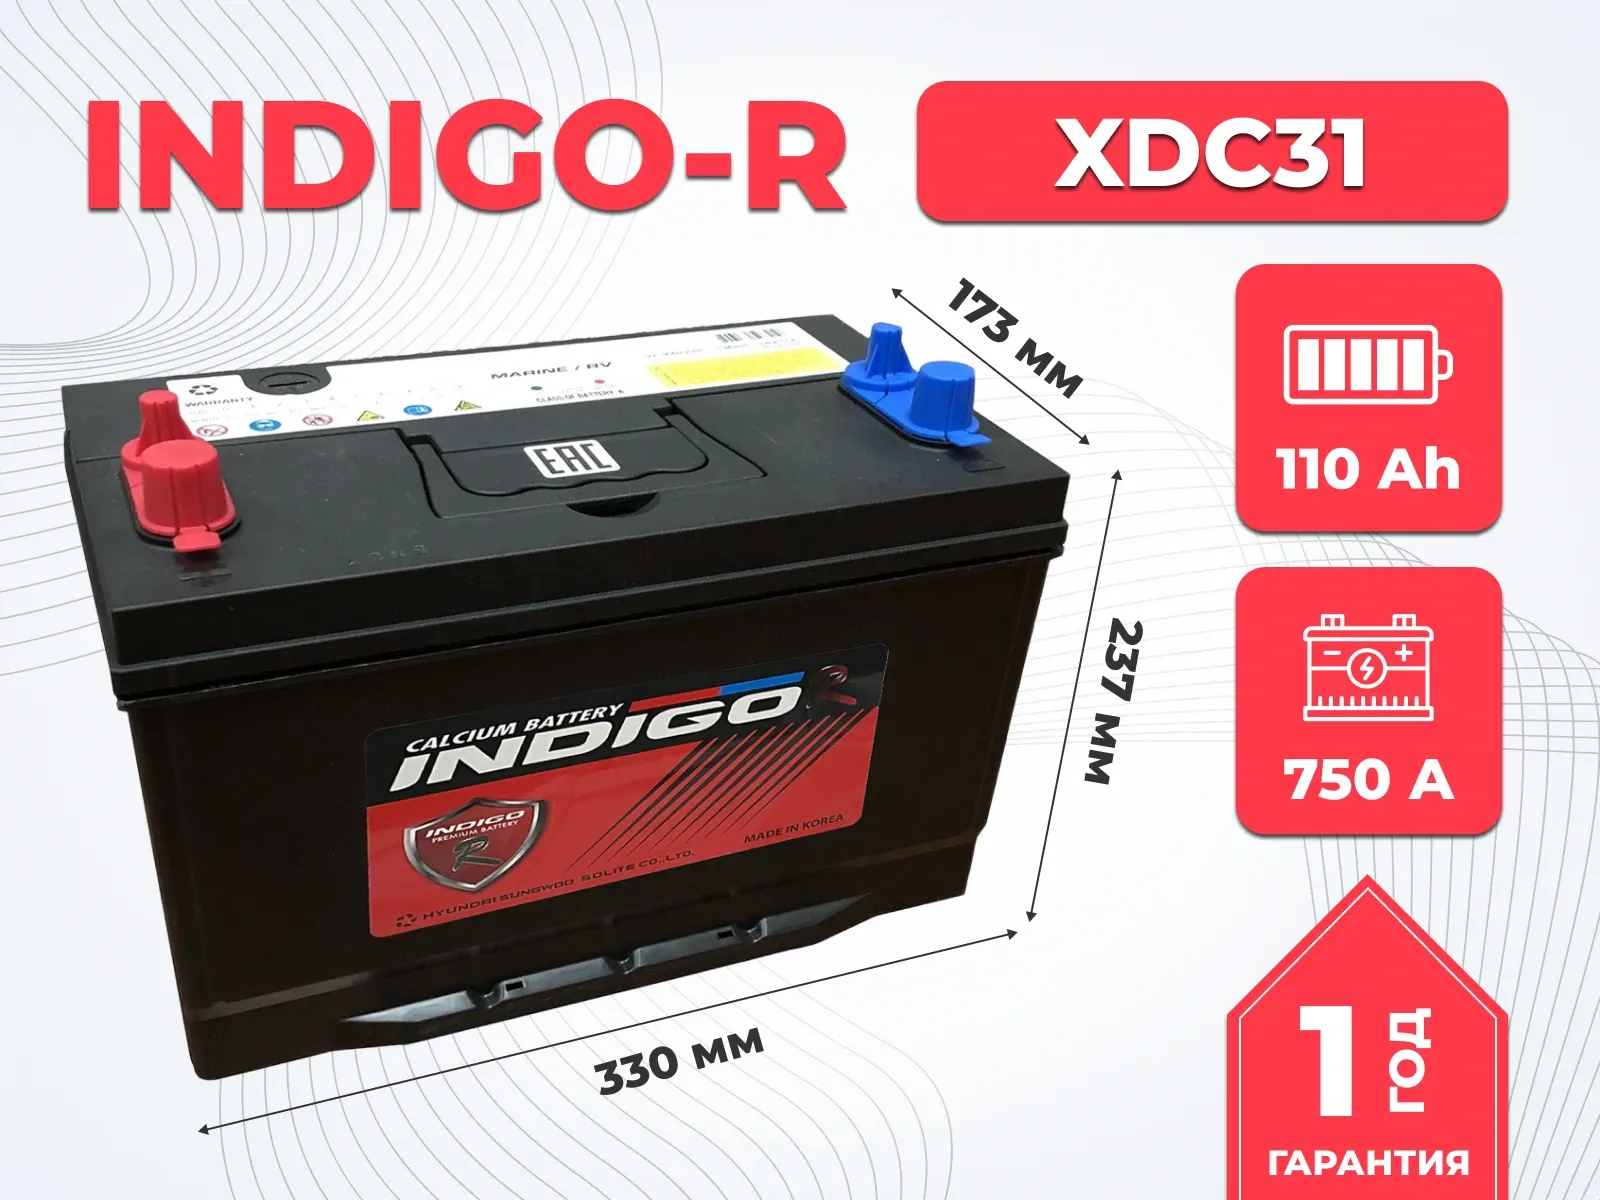 Аккумулятор INDIGO-R ХDC31 110Ah